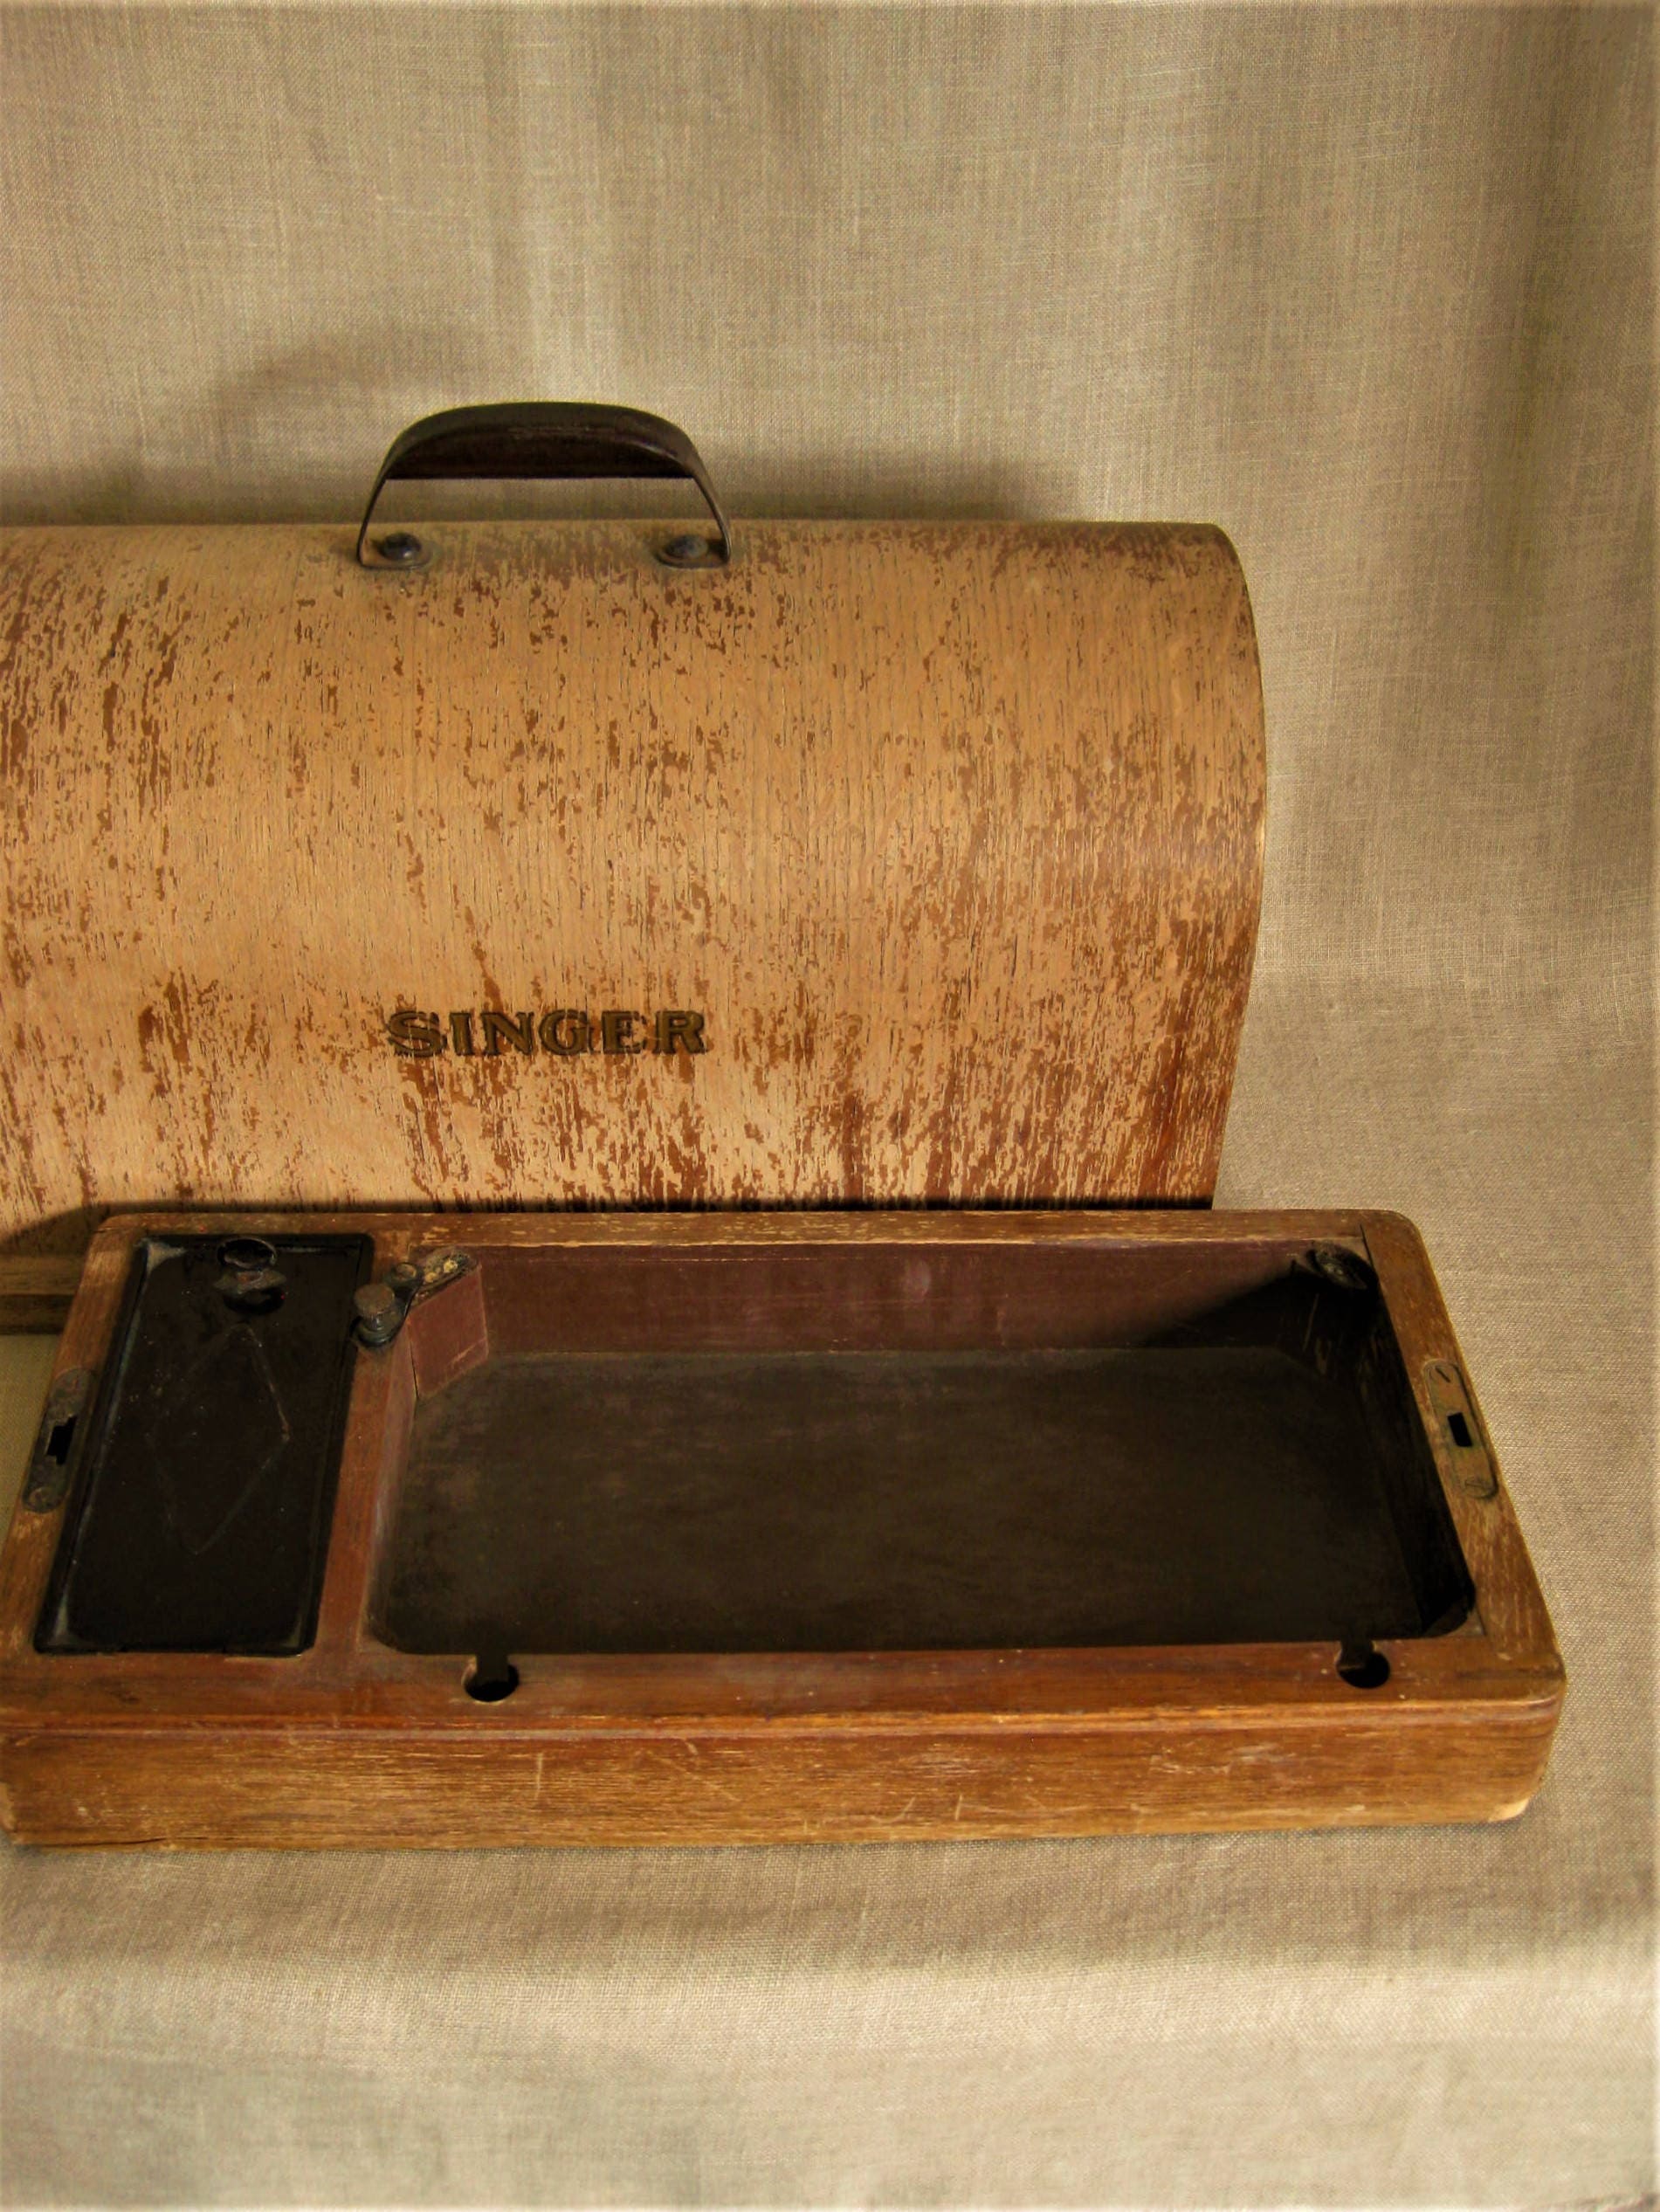 Antique Singer Sewing Machine Case, Wooden Box, Dome Top, Storage,  Organization, Large, Portable, Craft, Vintage, Rustic Decor, Primitive